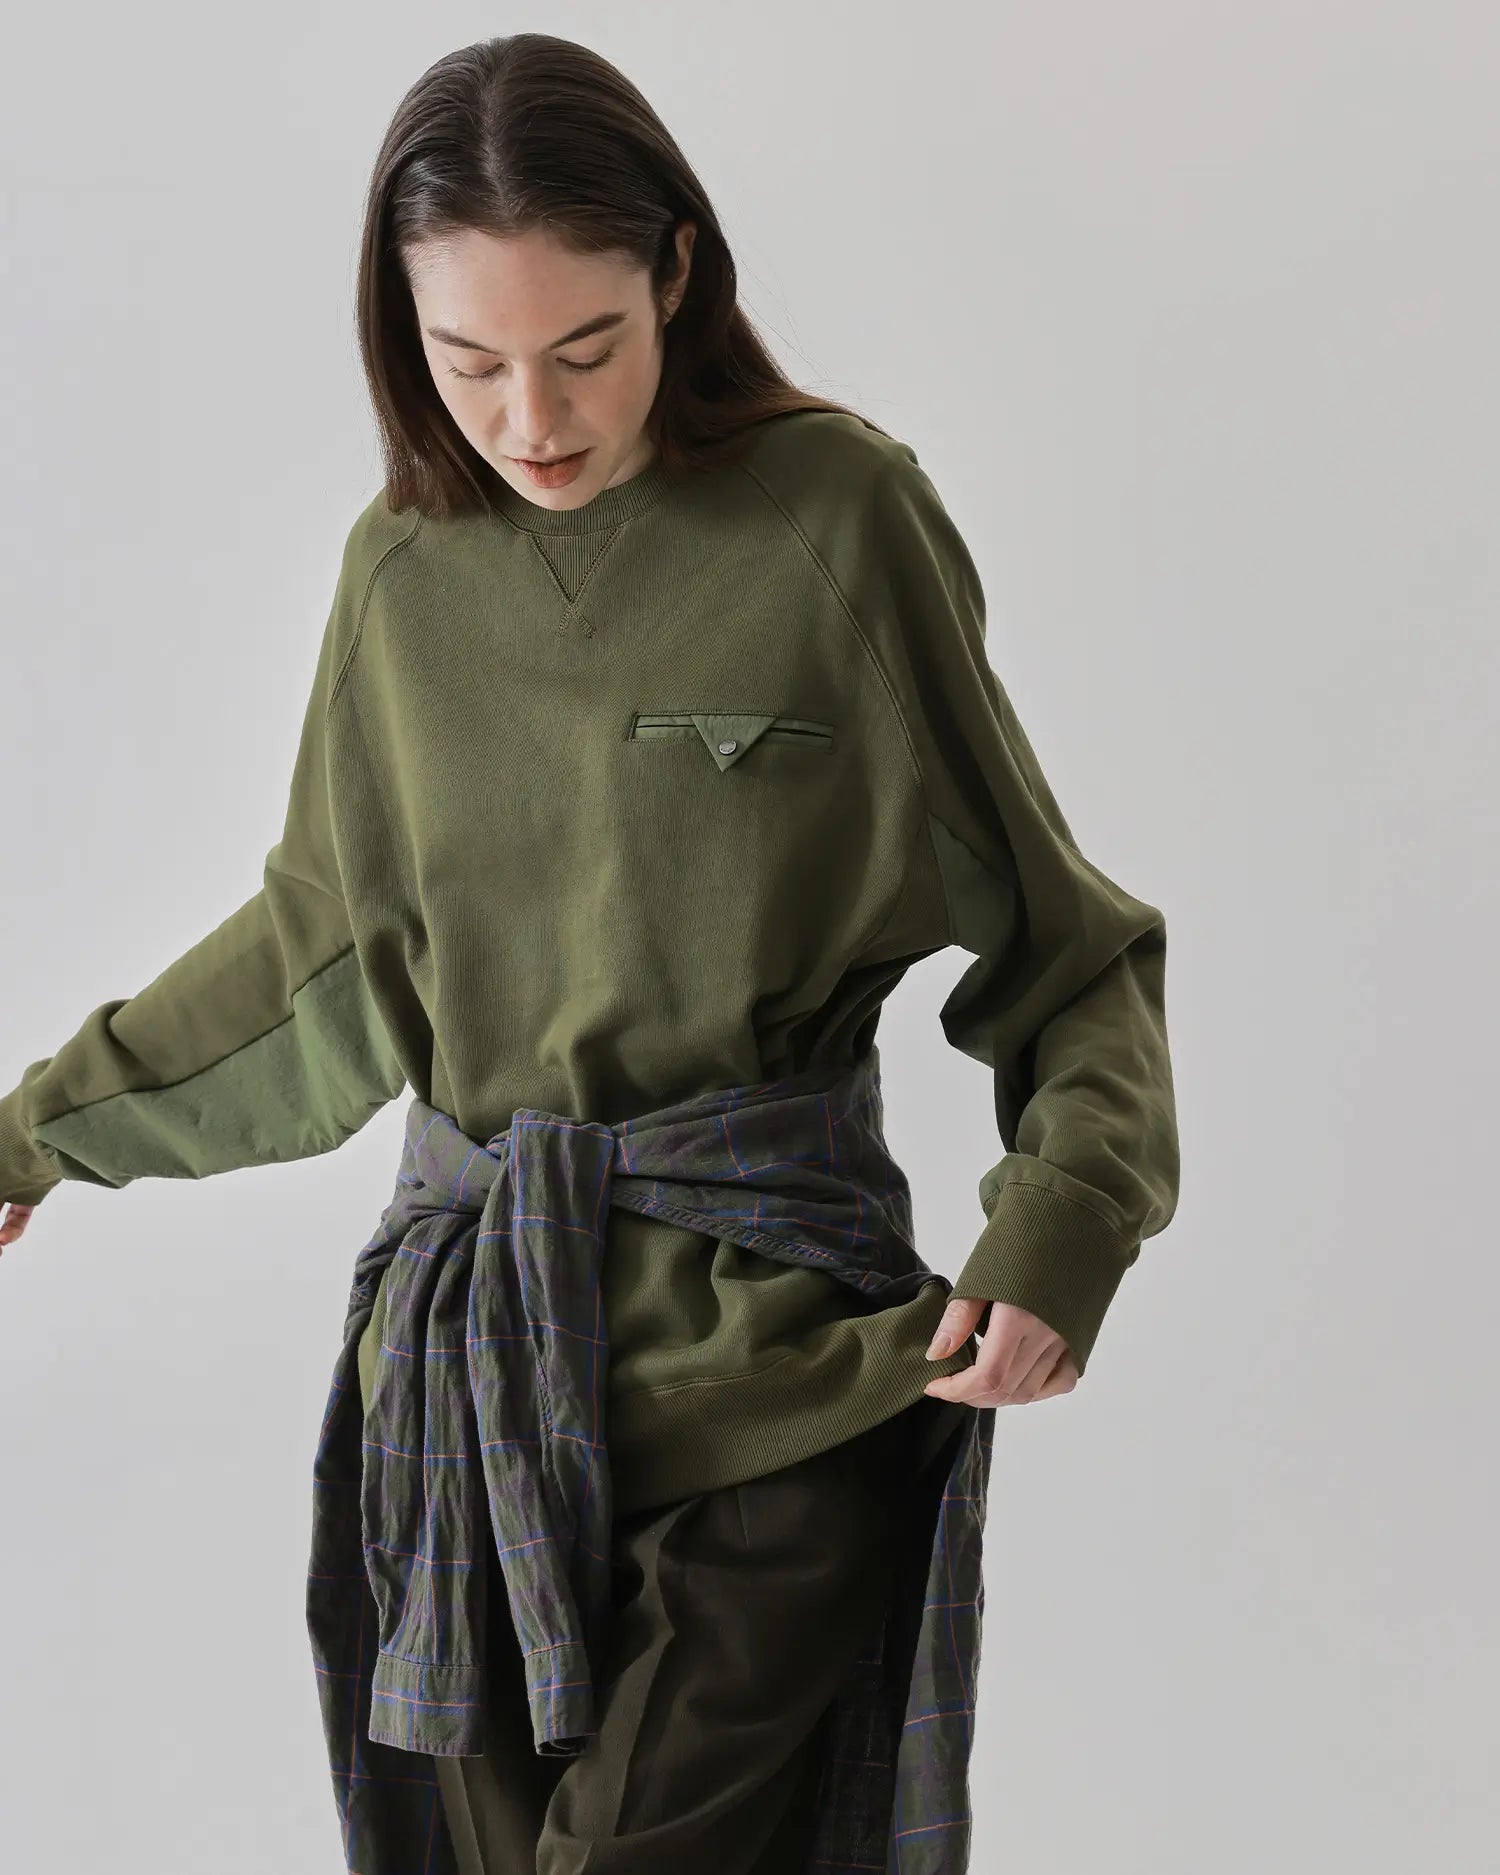 Women's Mixed Fabric Crew Sweatshirt in Military Green 05 #military-green